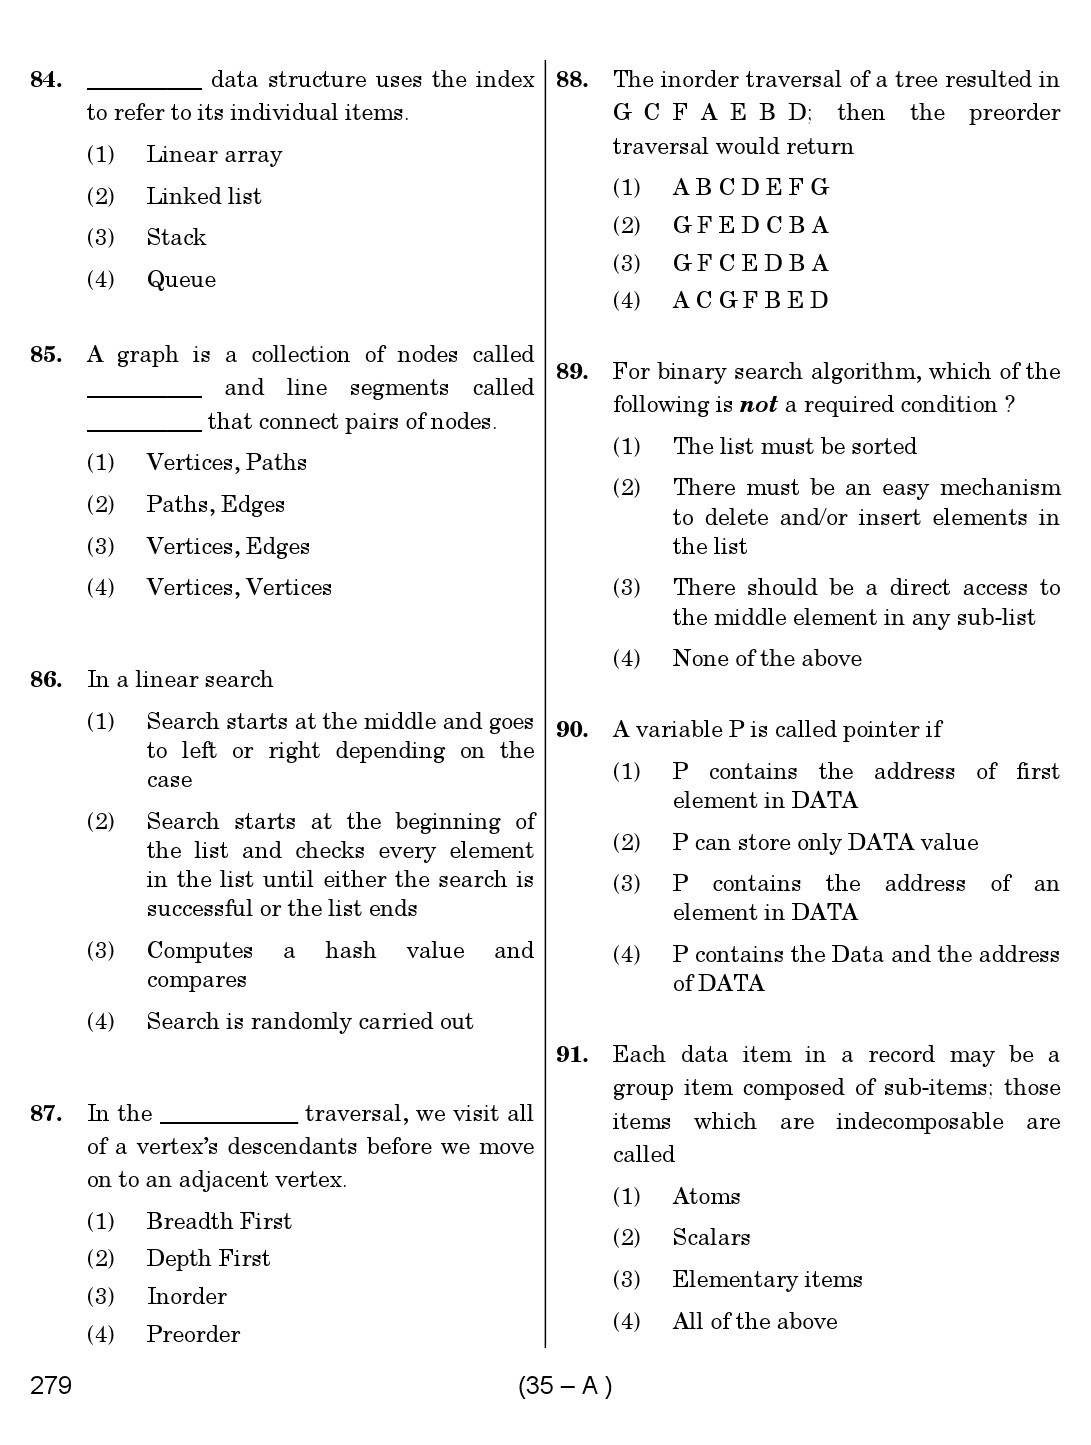 Karnataka PSC Computer Science Teachers Exam Sample Question Paper Subject code 279 35